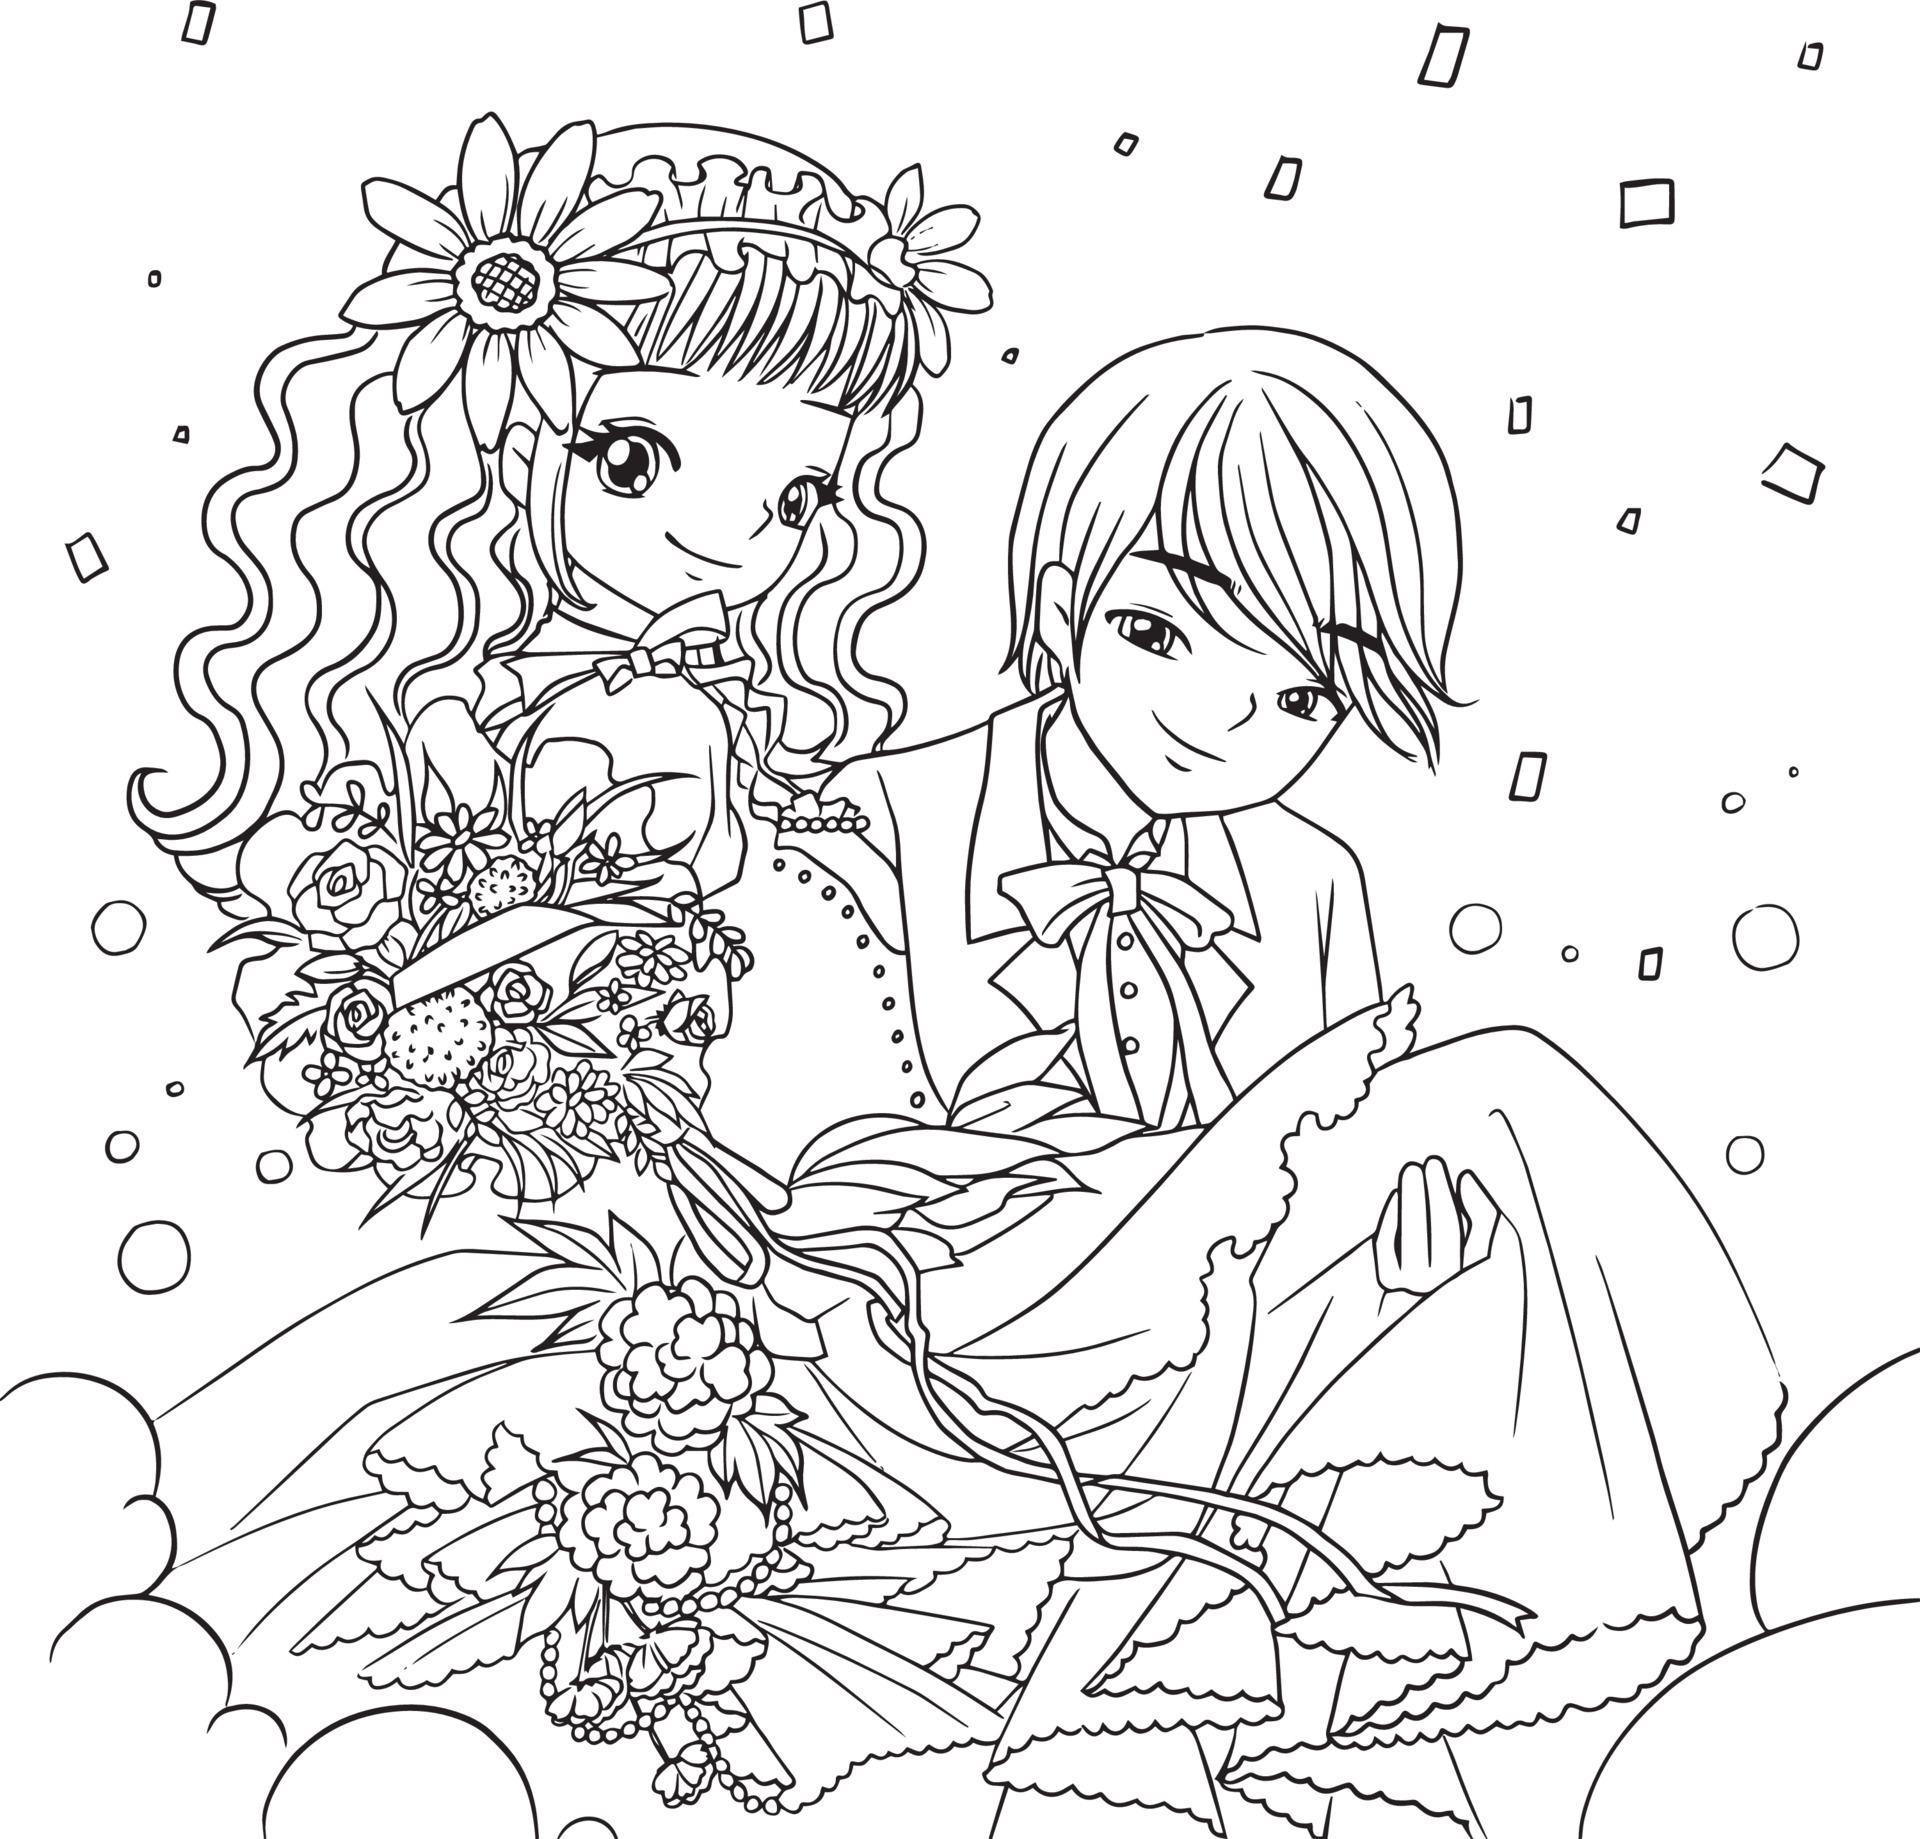 HD wallpaper Anime Princess Drawing prince sketch Artistic Drawings  copy space  Wallpaper Flare